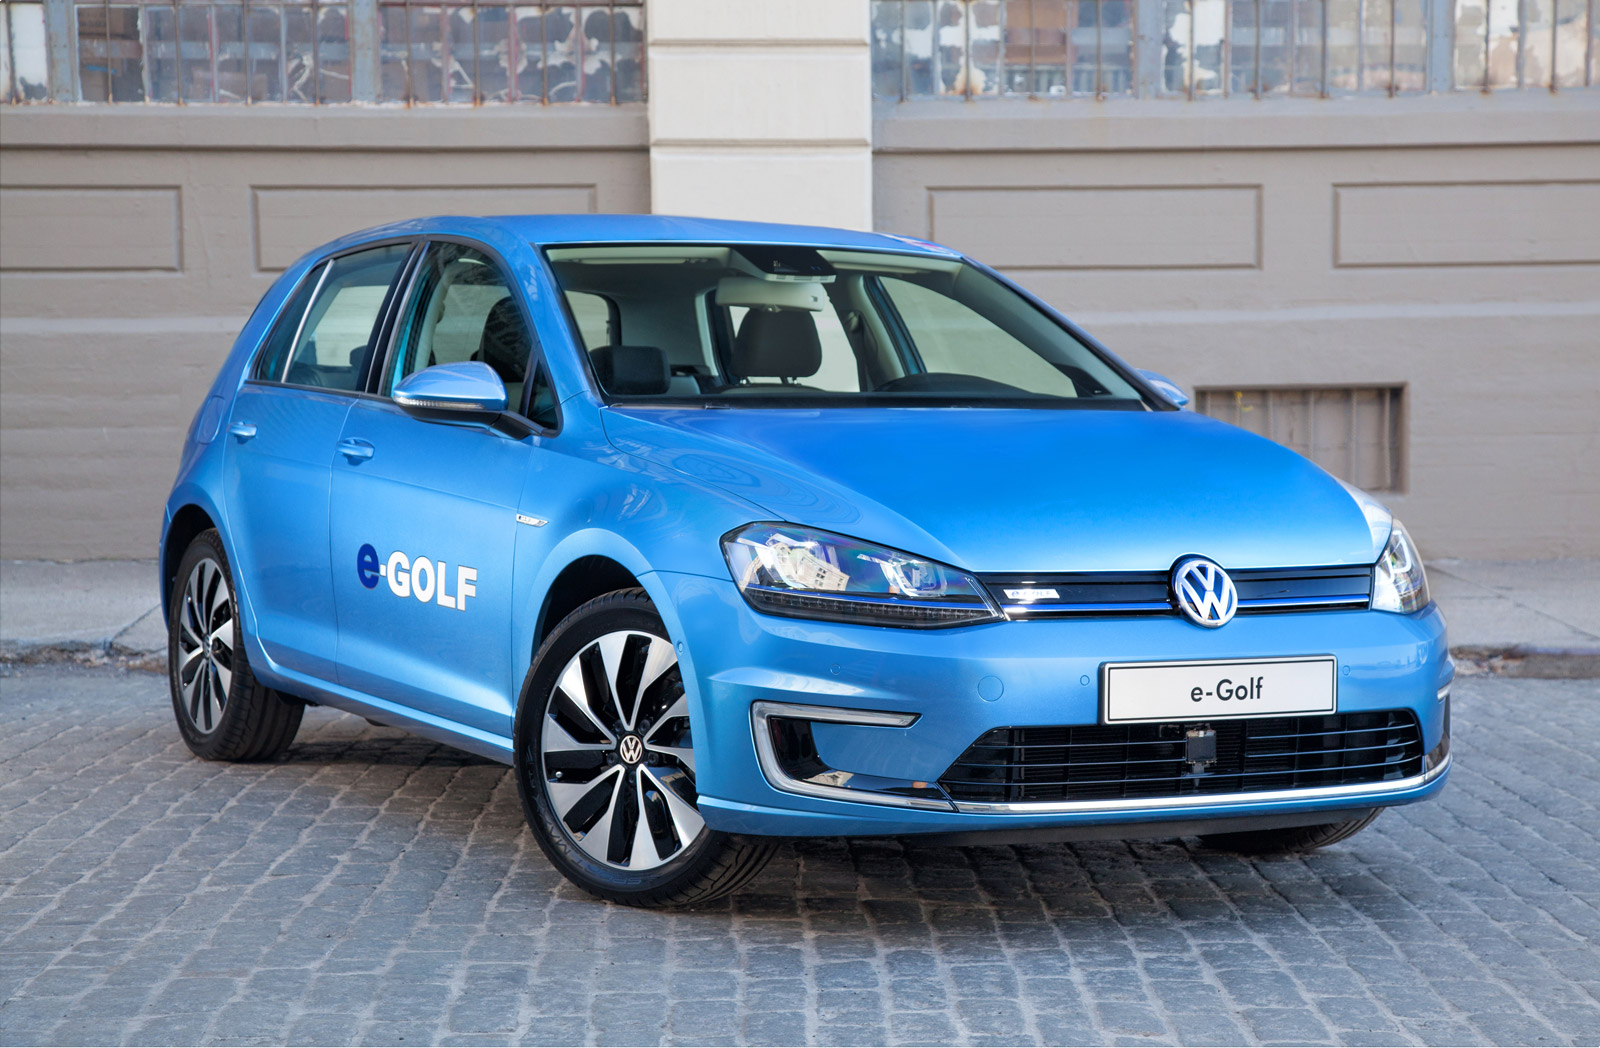 Sump Berolige Opiate 2015 Volkswagen e-Golf Price To Start At $36,265, Top Trim Level Only